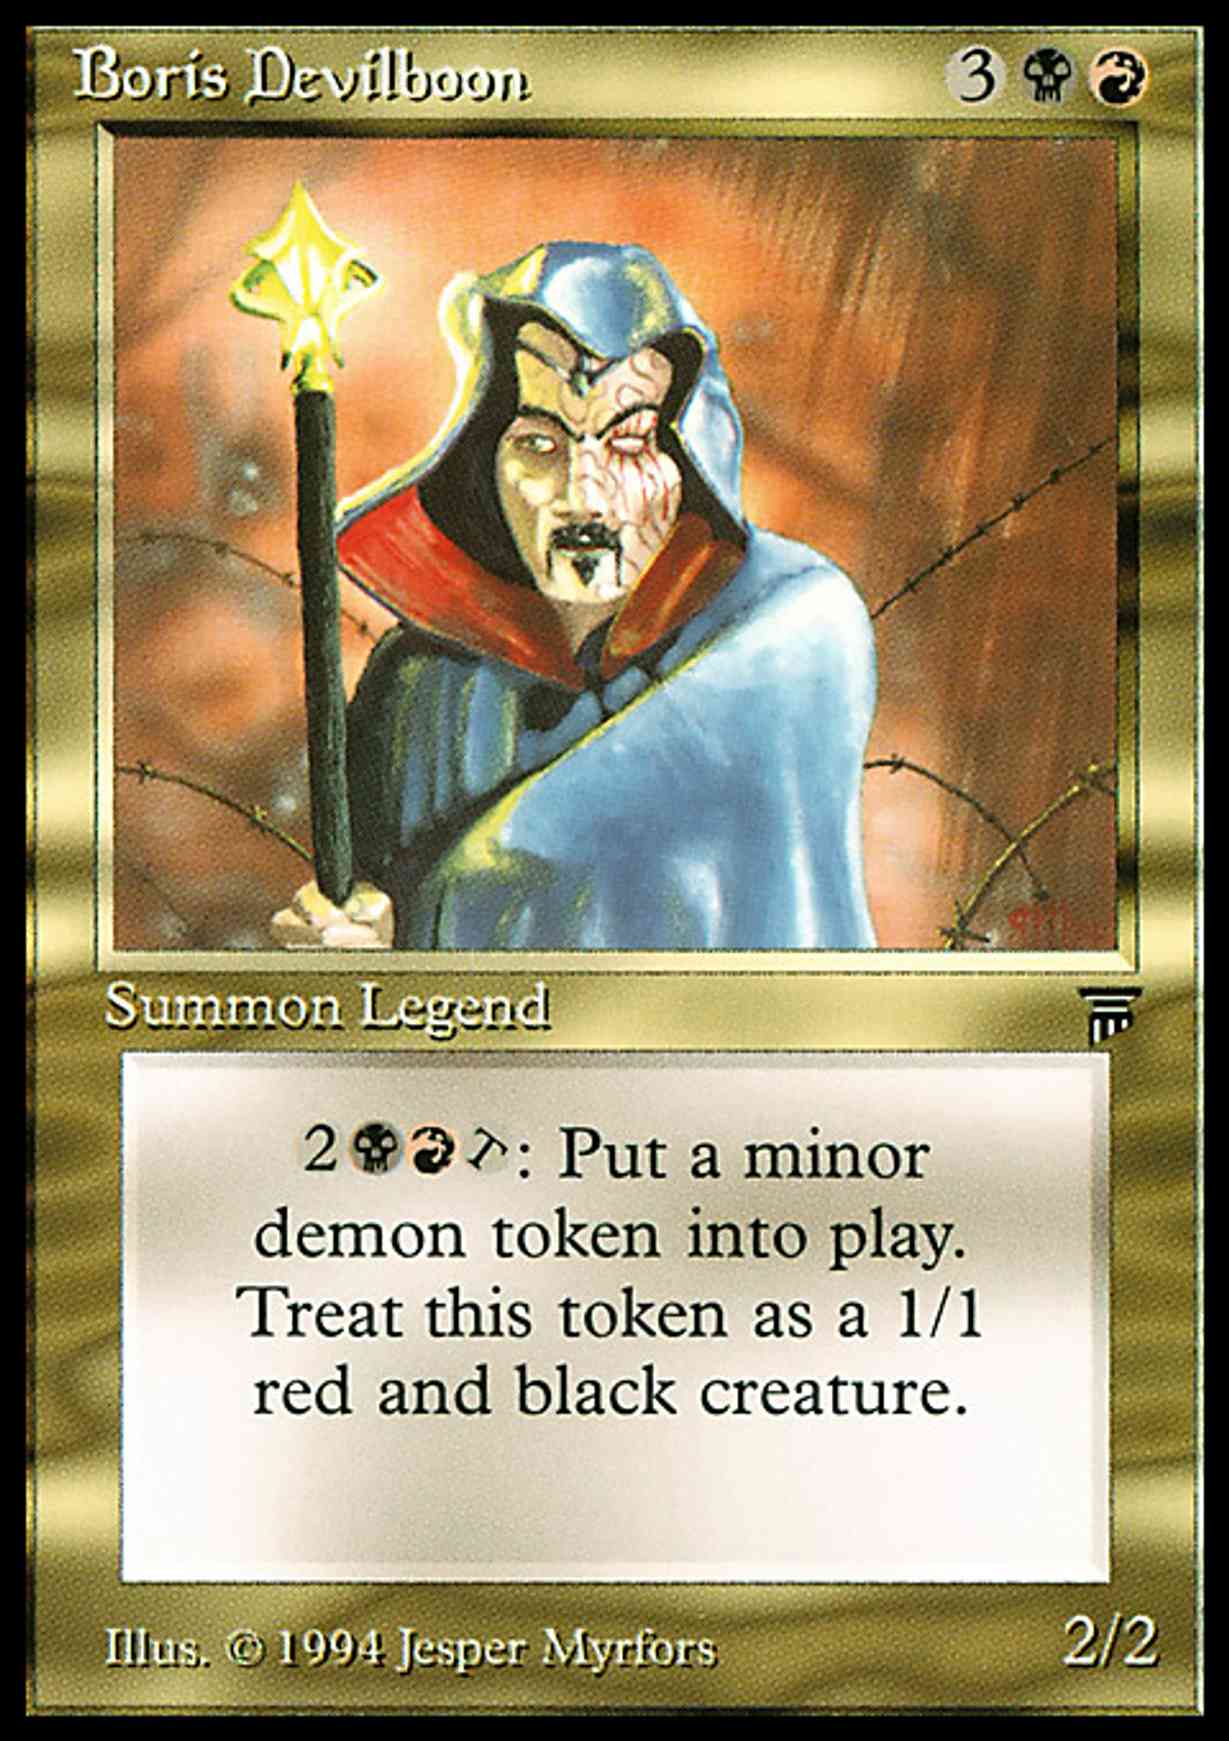 Boris Devilboon magic card front